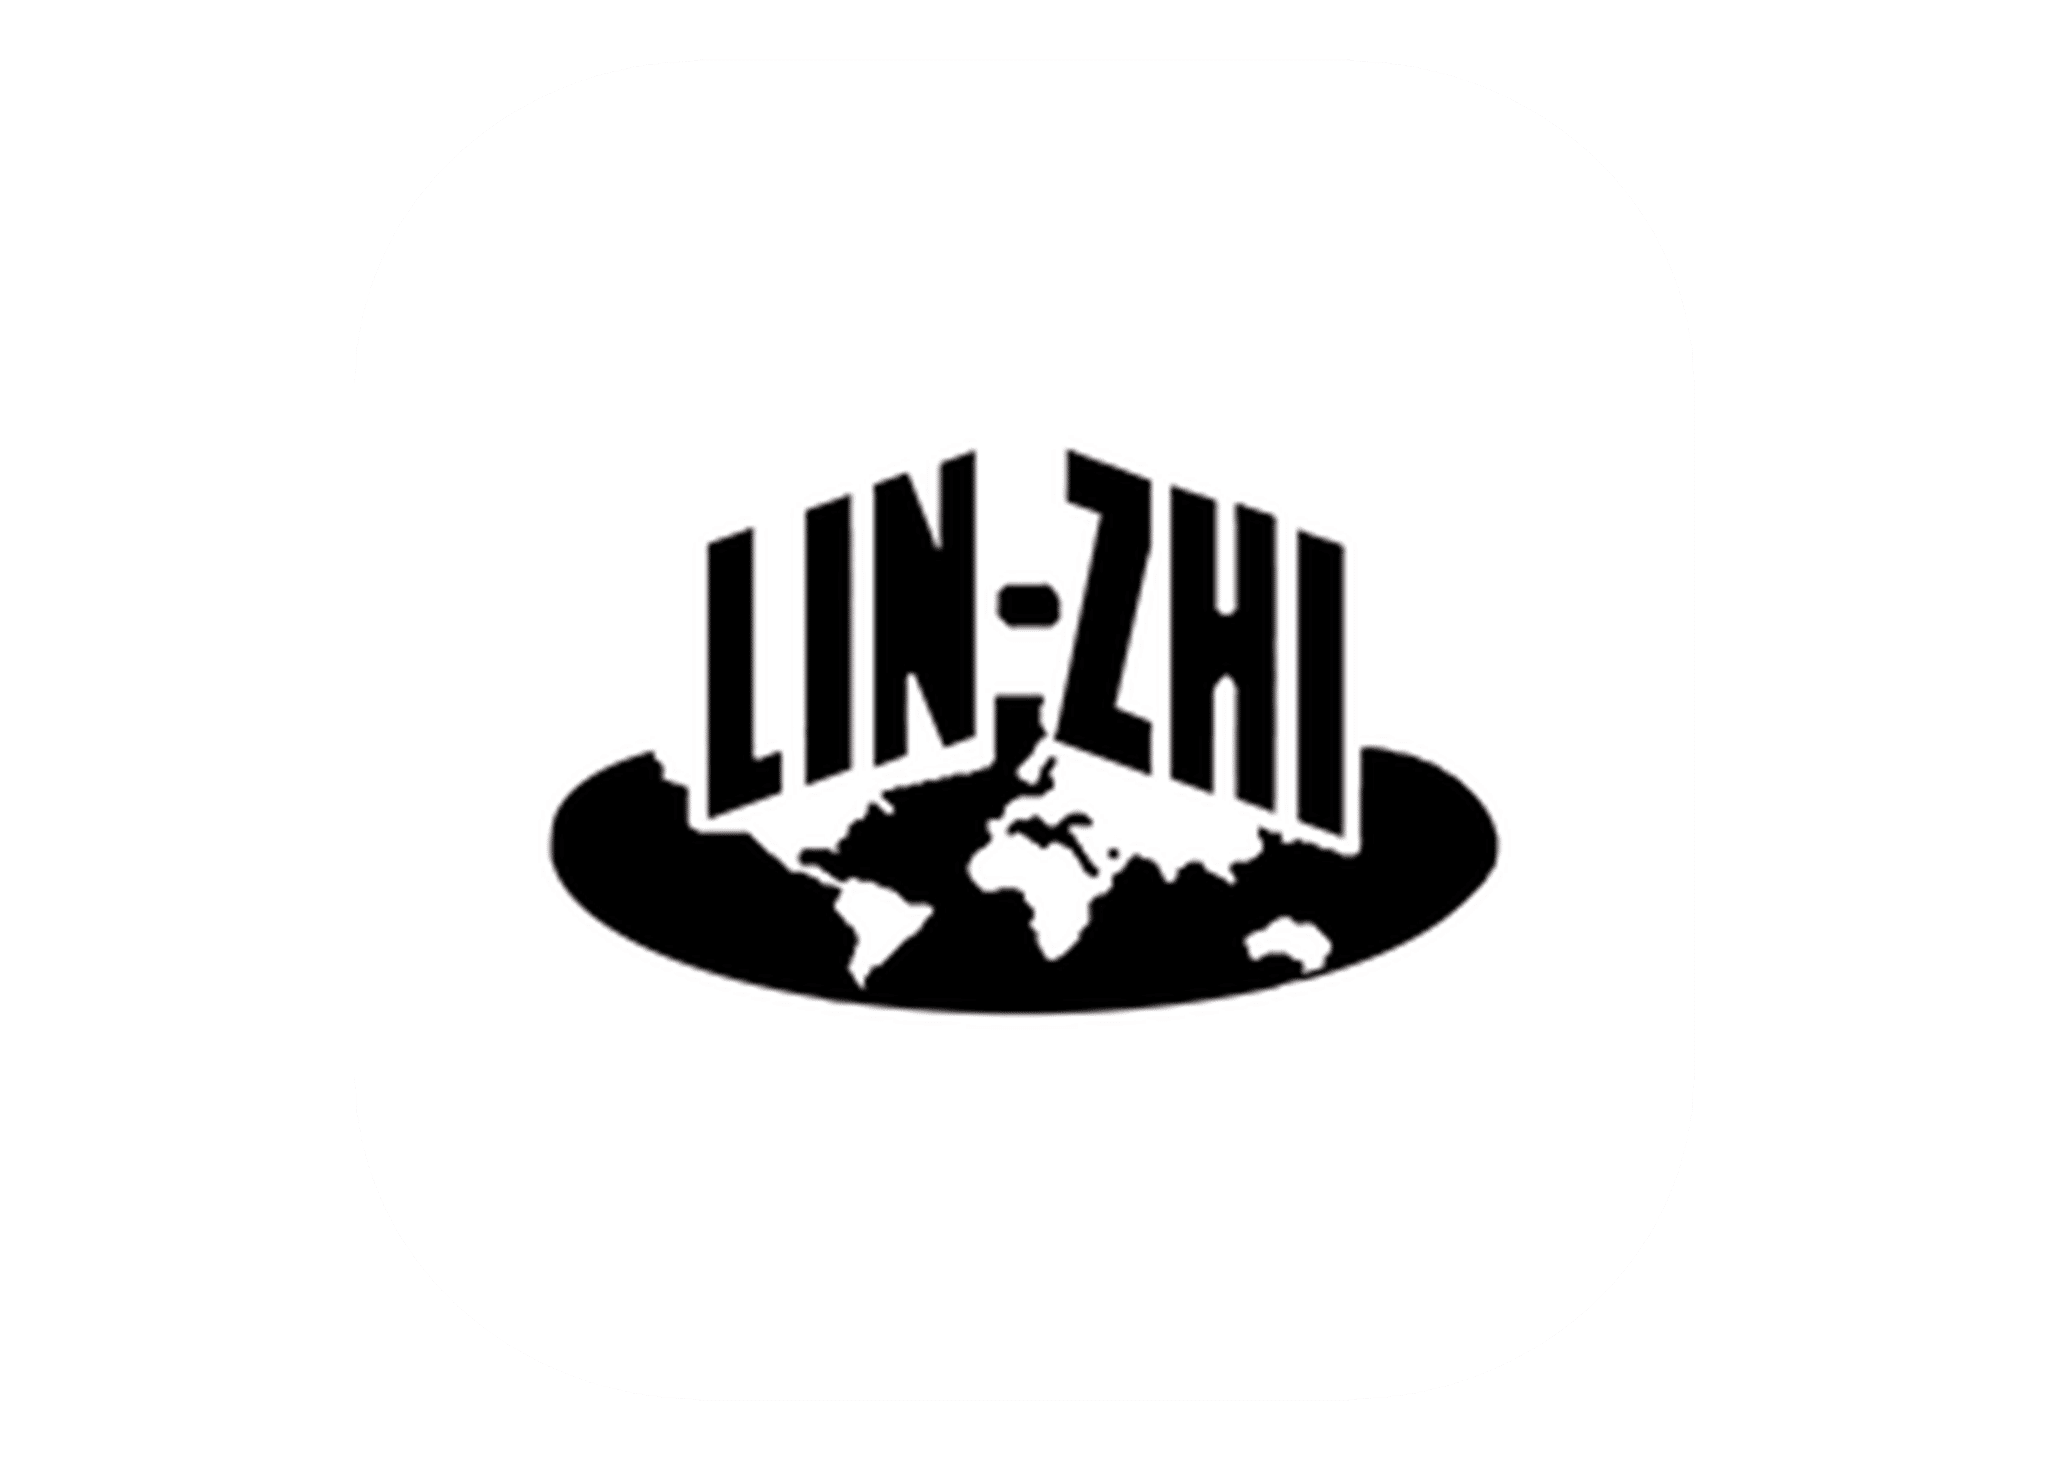 LinZhi